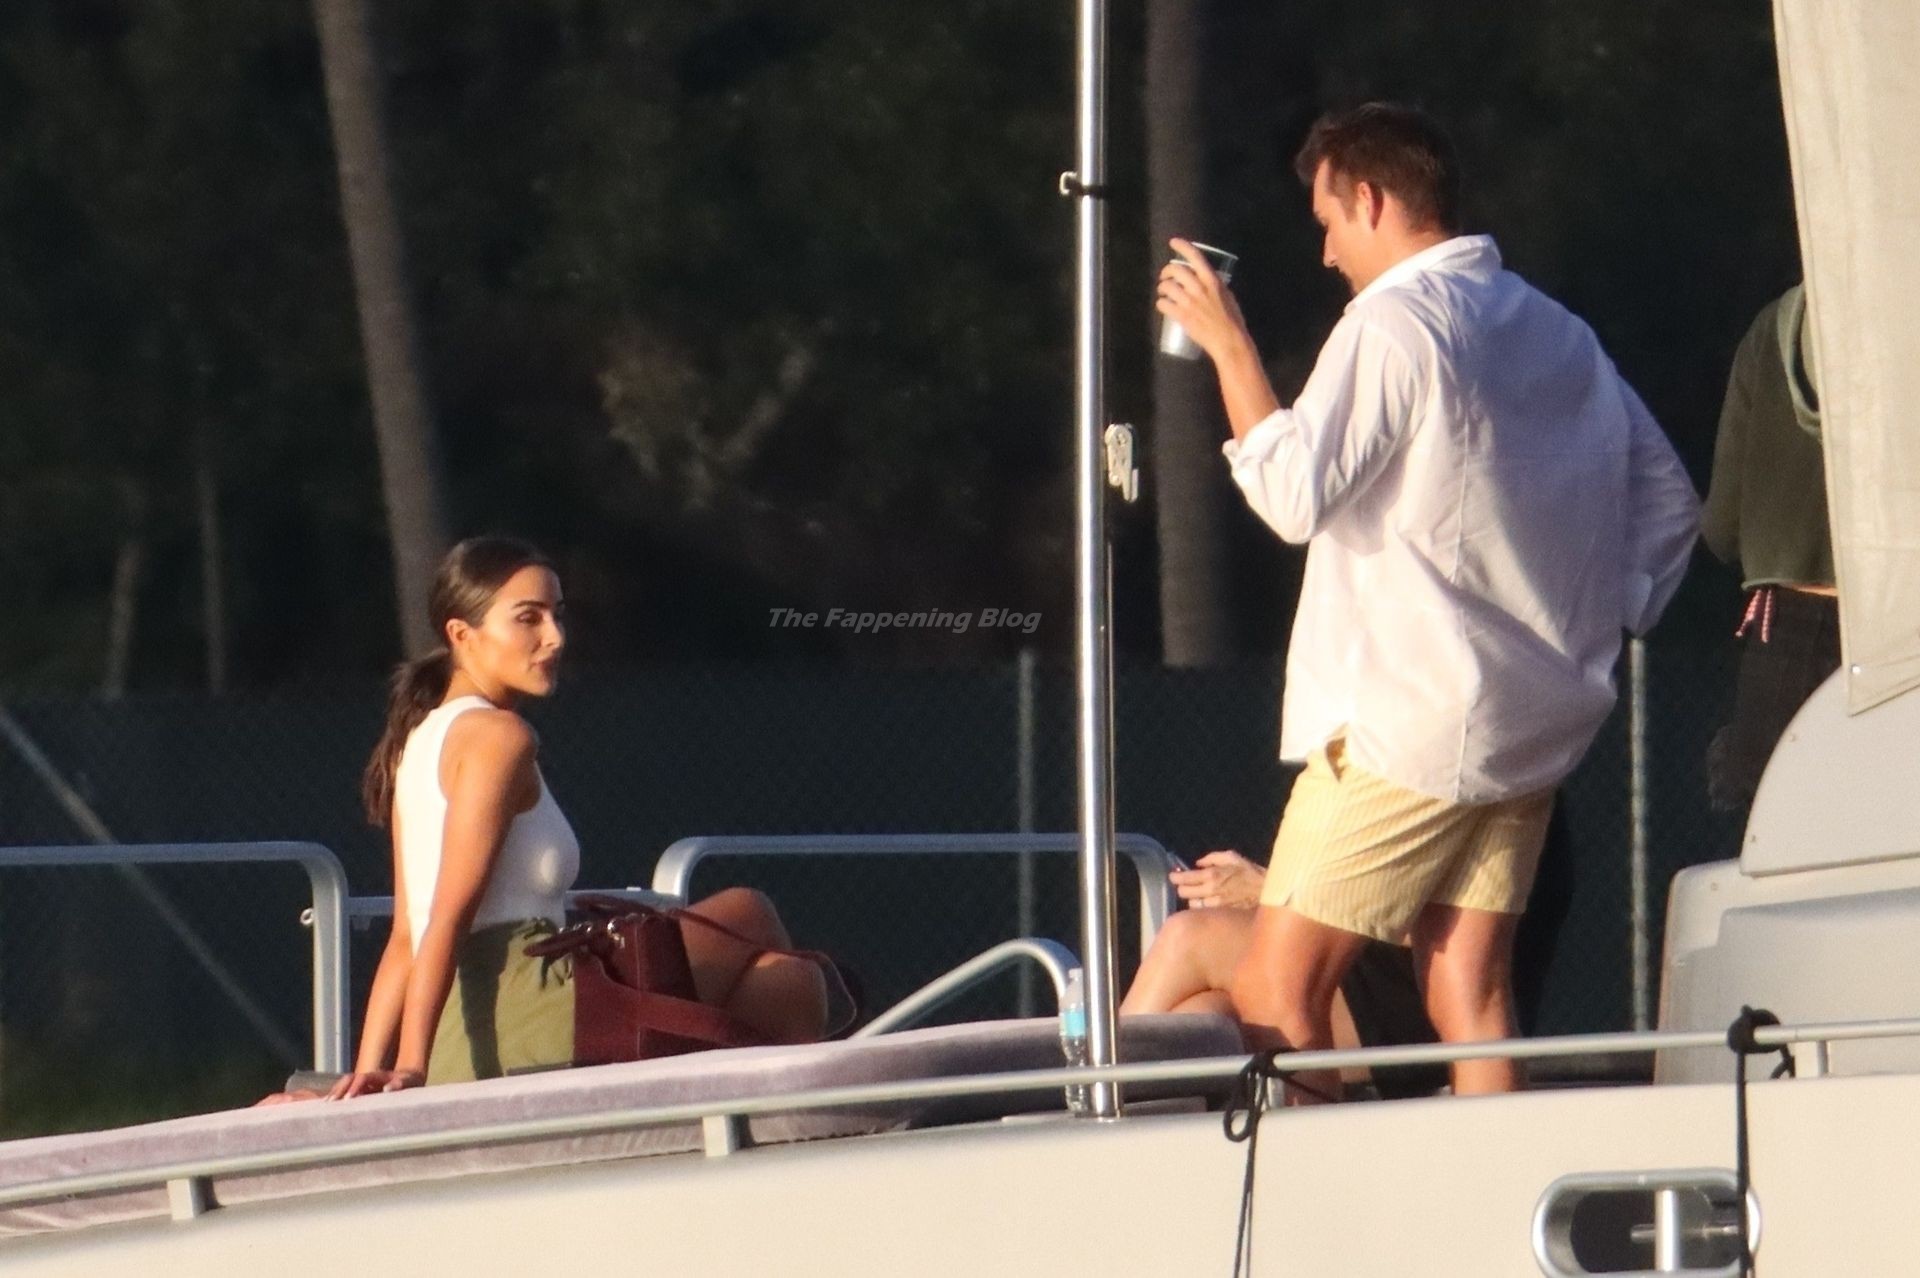 Olivia Culpo Enjoys a Boat Party on a Sunny Afternoon in Miami Beach (51 Photos)